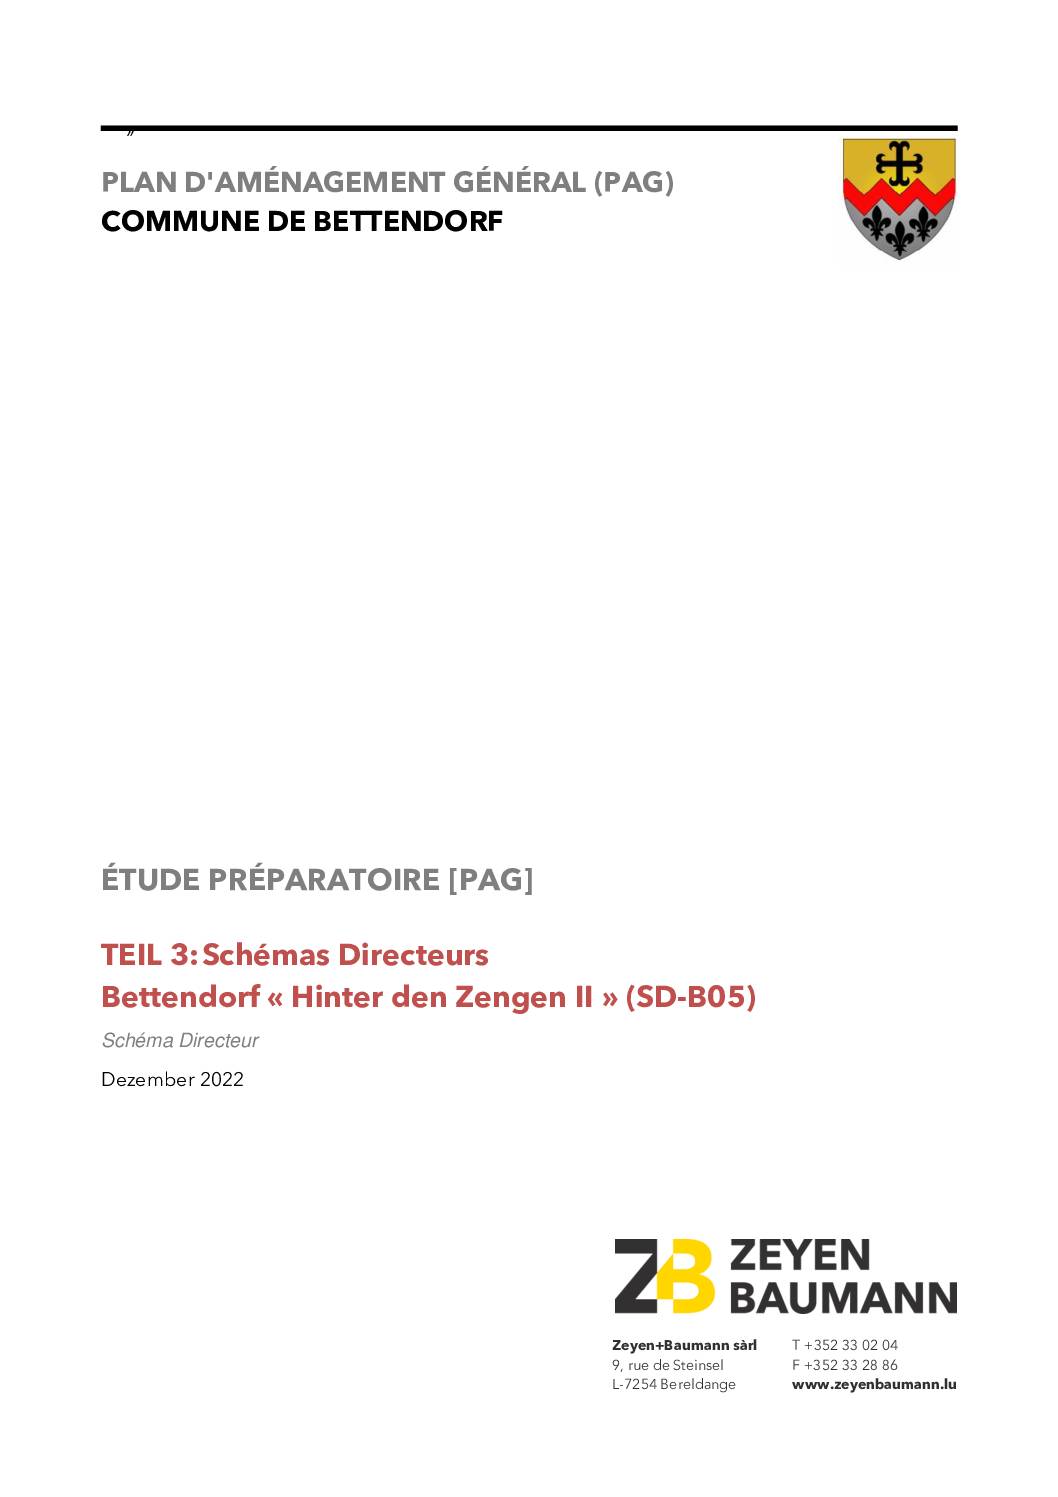 SD_B05_Hinter den Zengen II_2022-12